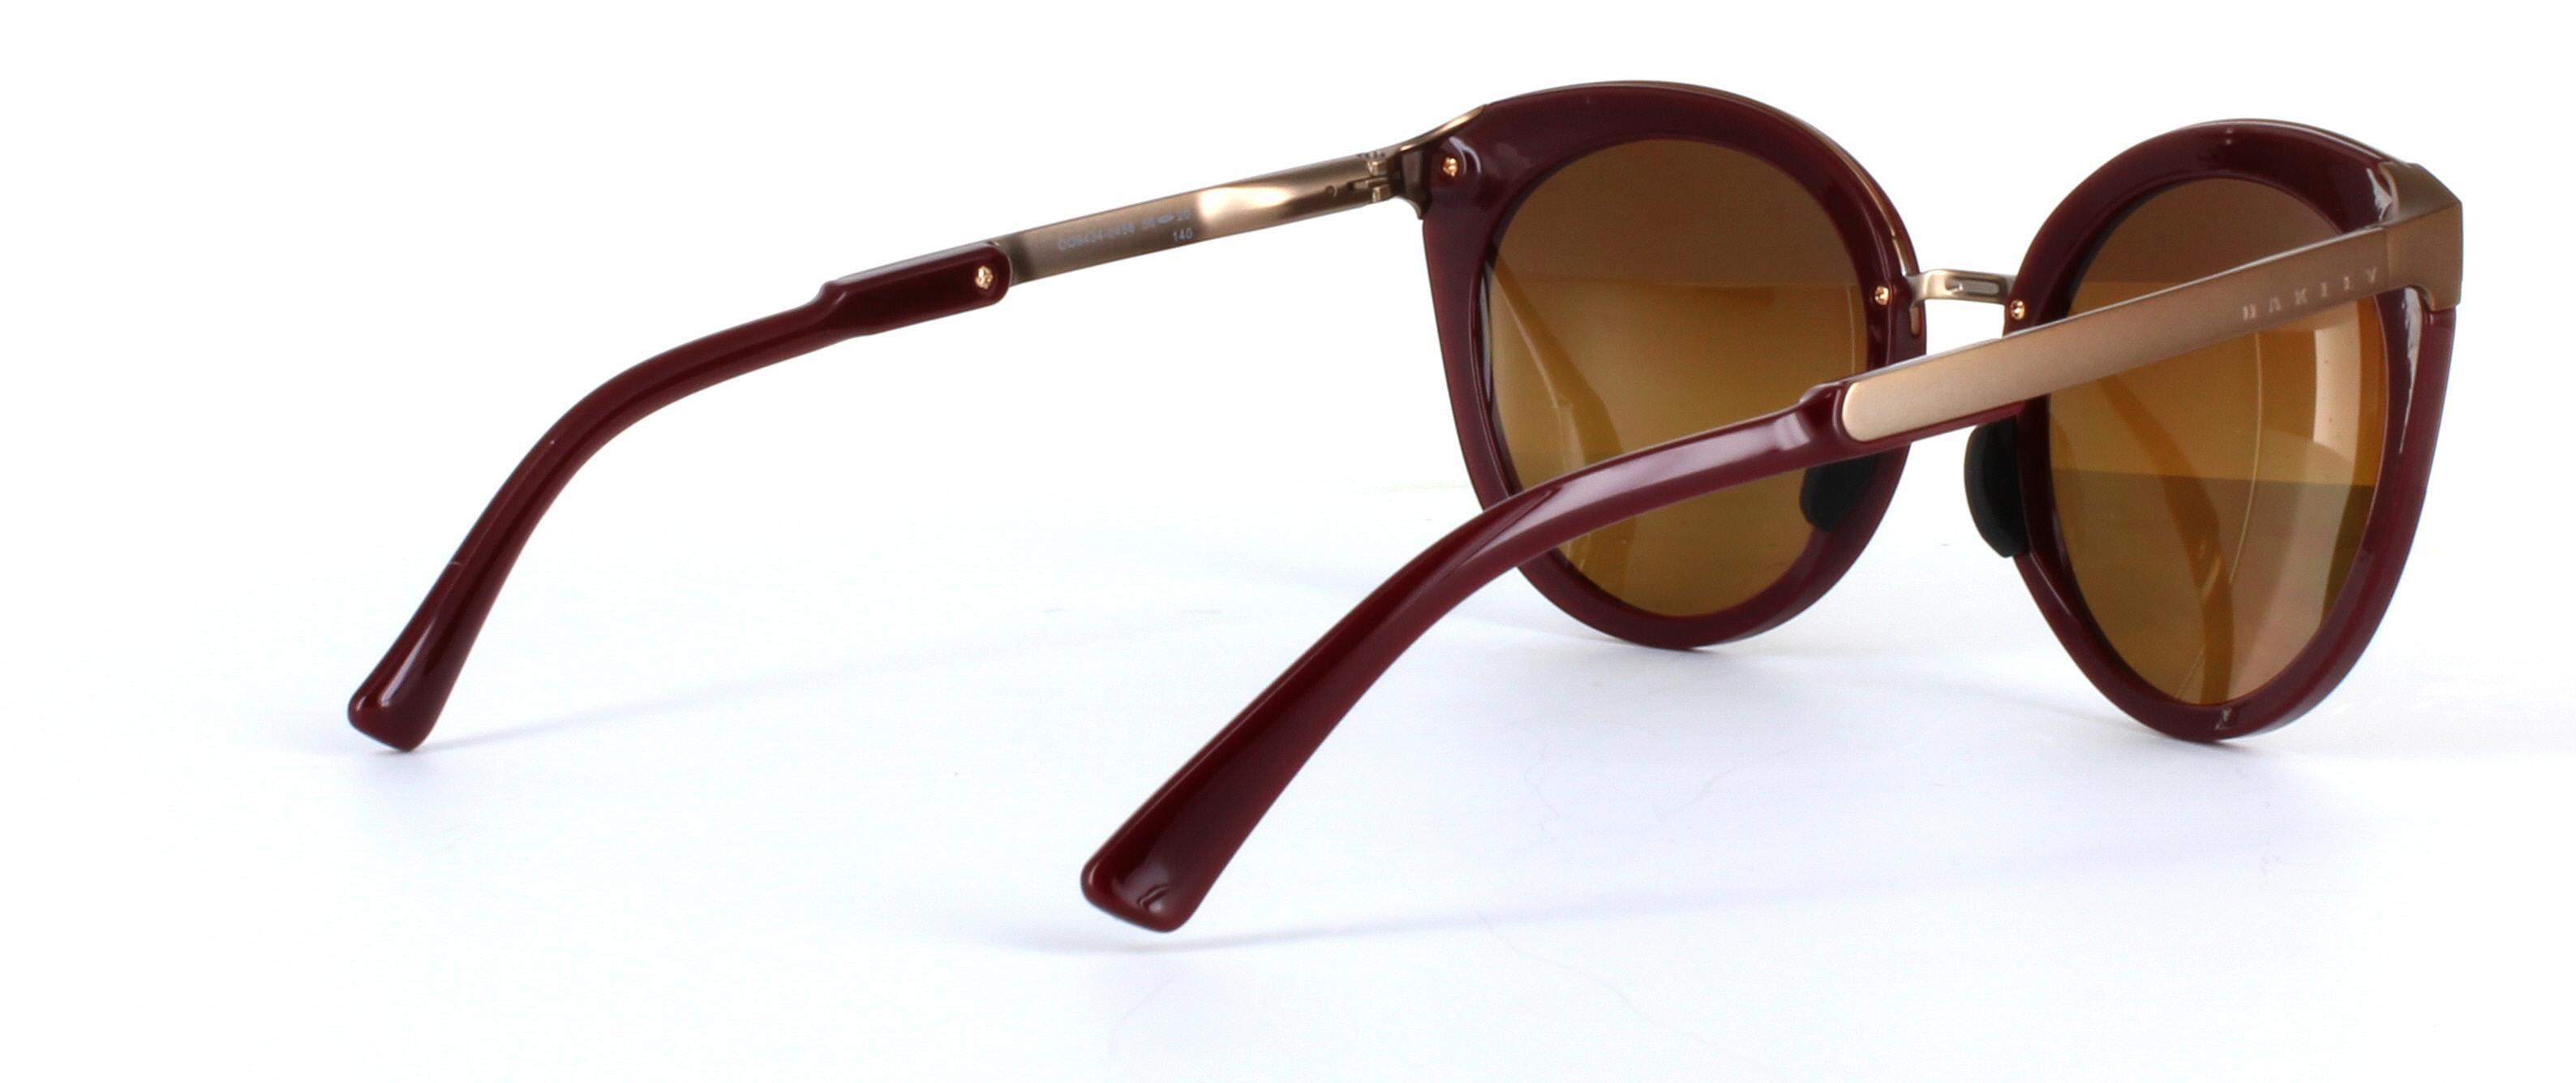 Oakley (O9434) Burgundy Full Rim Plastic Prescription Sunglasses - Image View 4